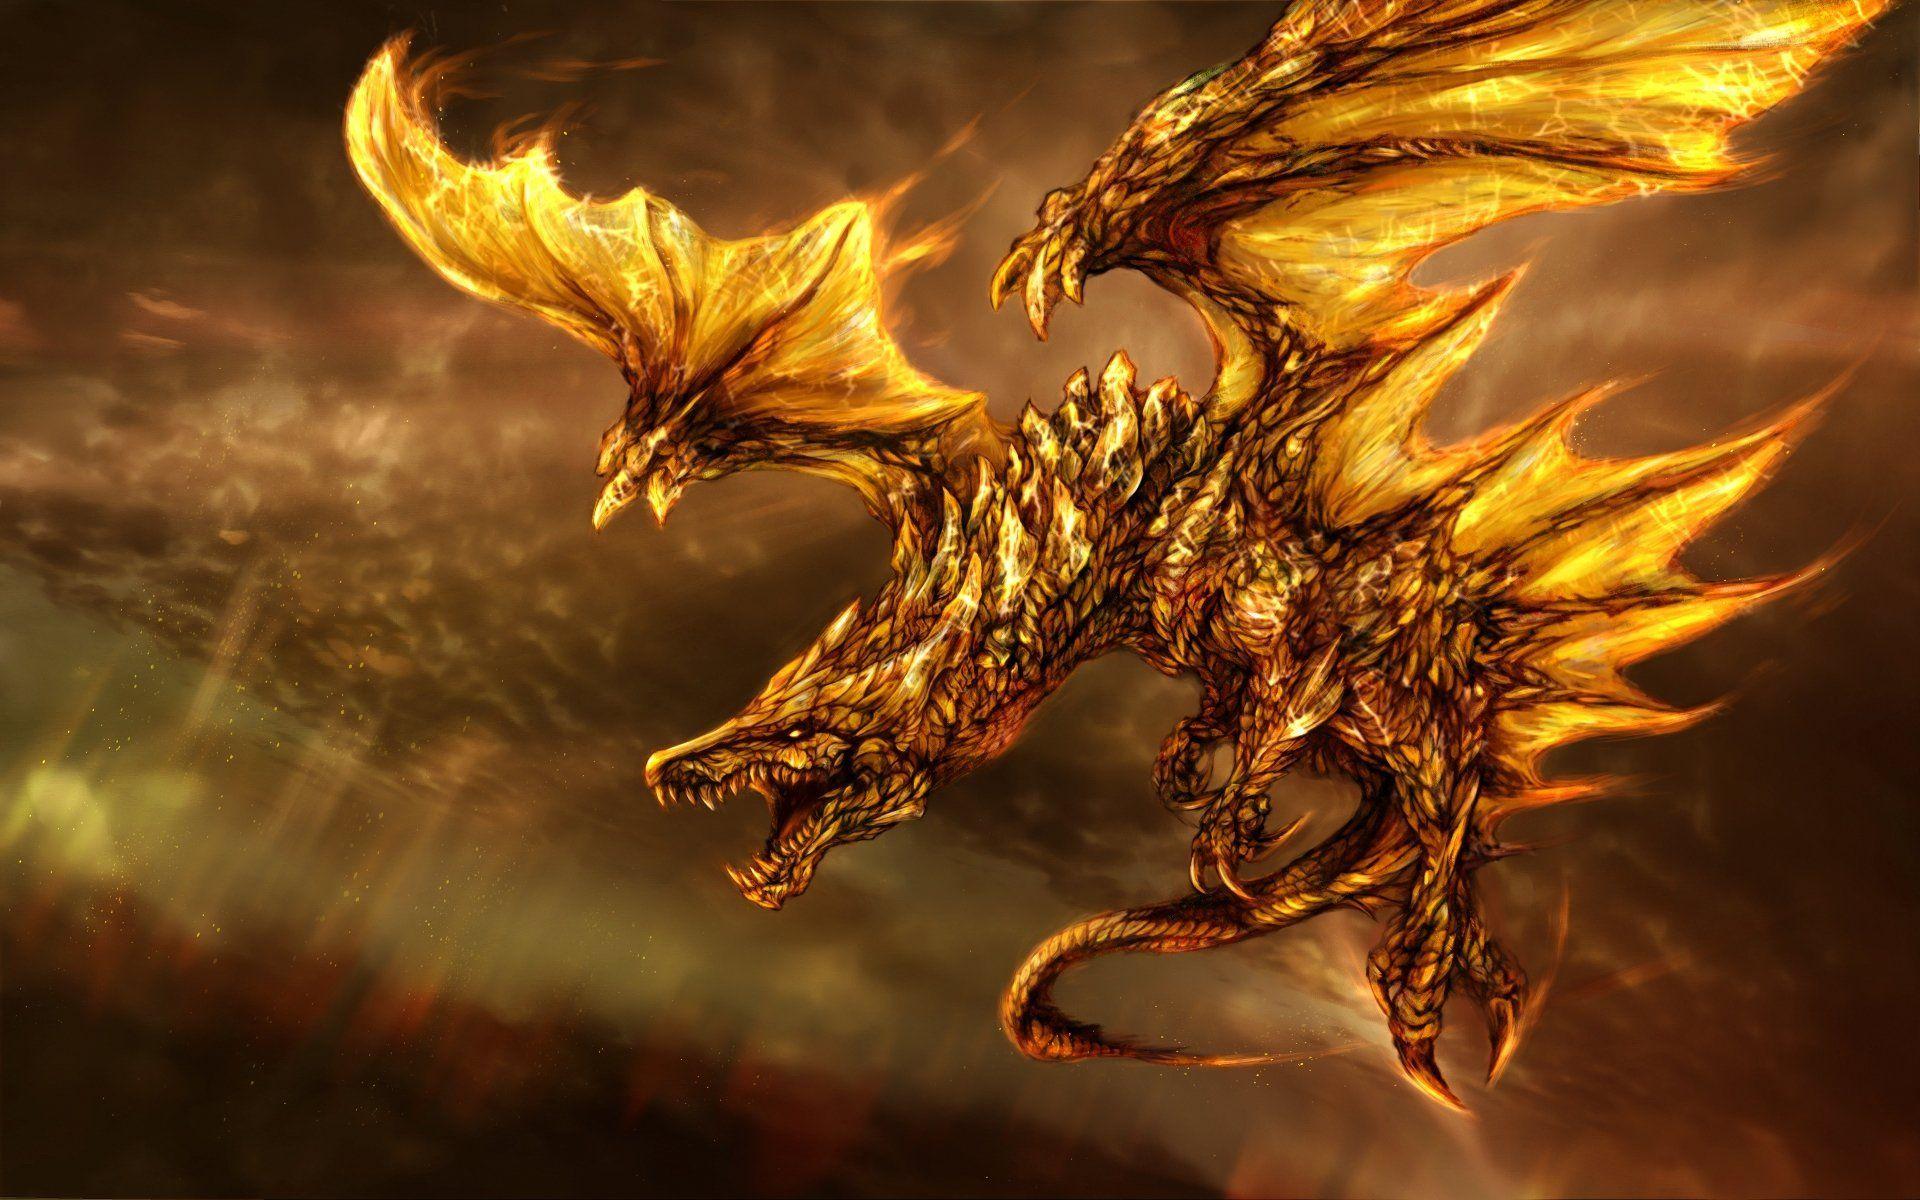 dragon picture. Dragon Wallpaper HD Free Download. Wallcapture